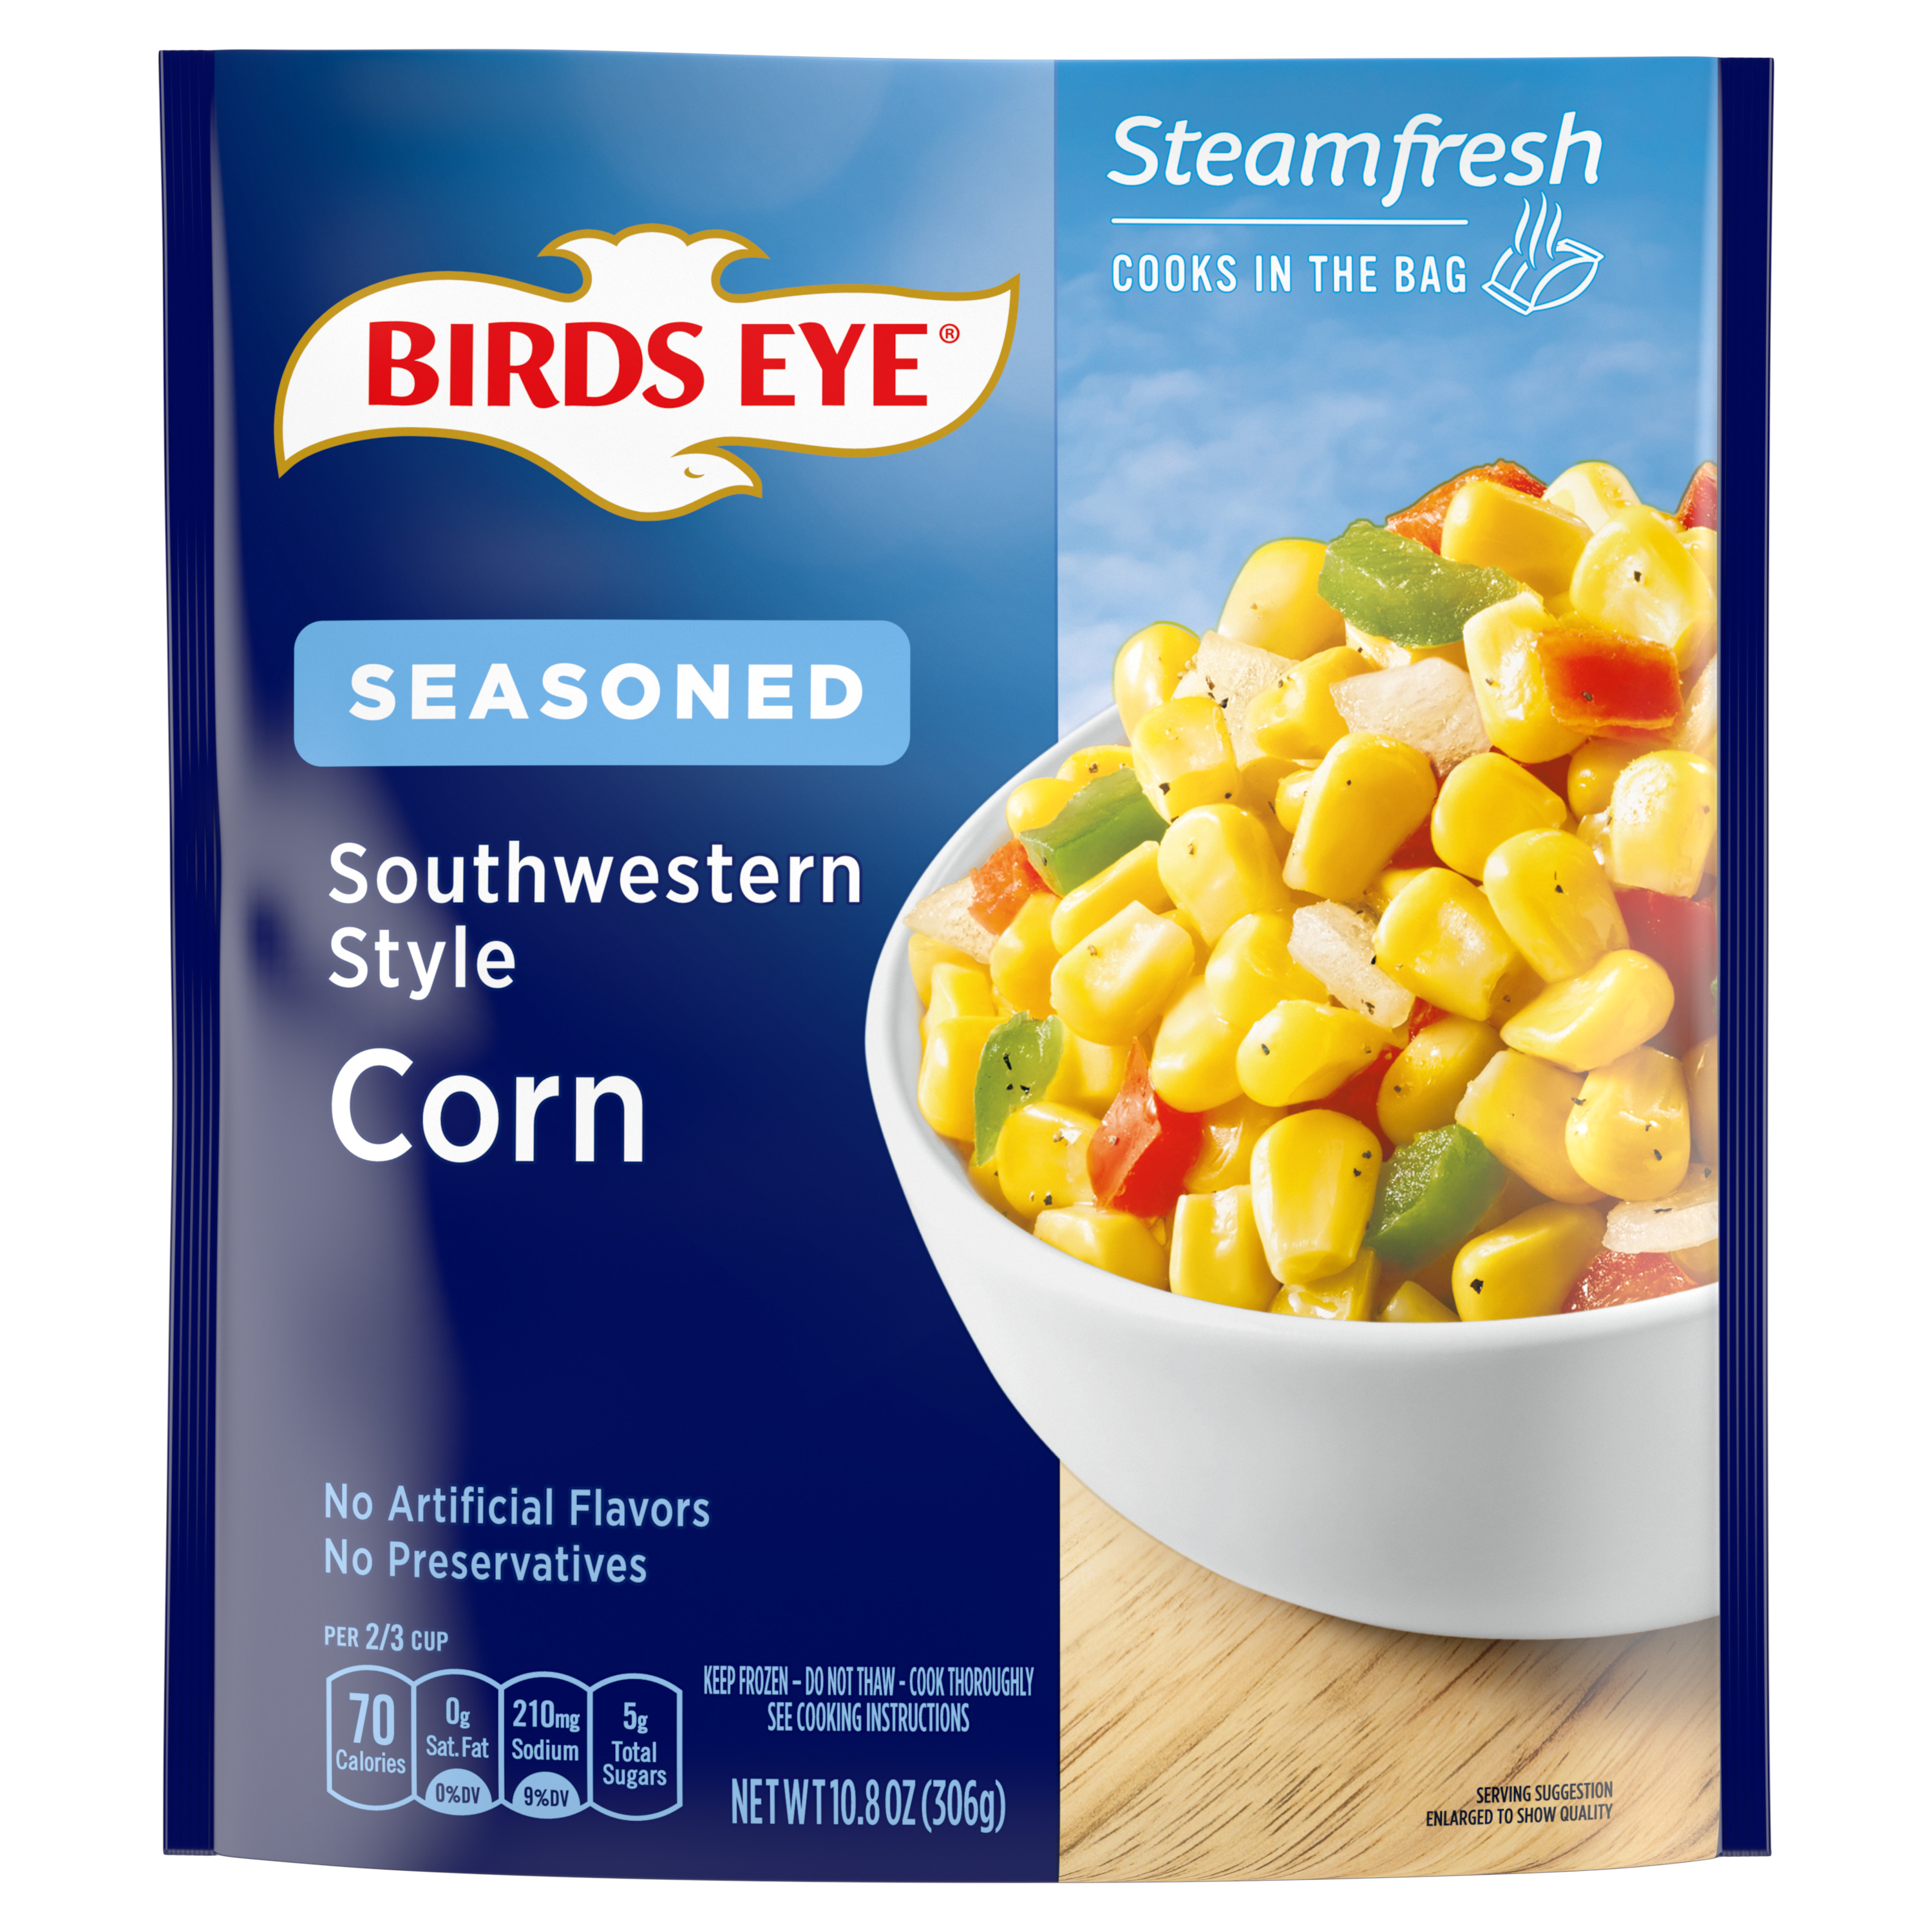 Birds Eye Steamfresh Chef’s Favorites Seasoned Southwest Corn